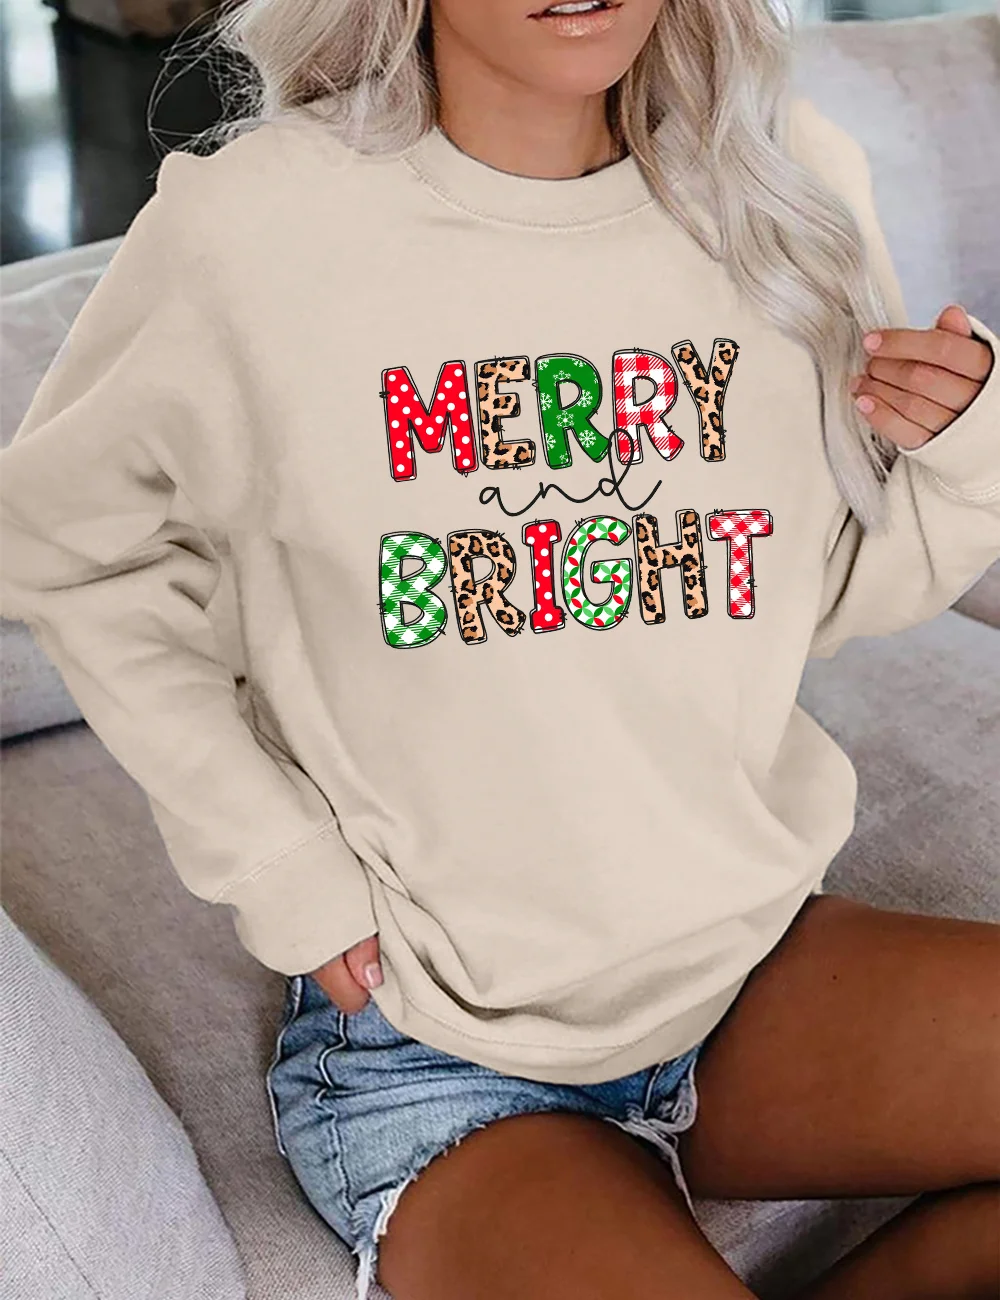 Merry and Bright Christmas Sweatshirt